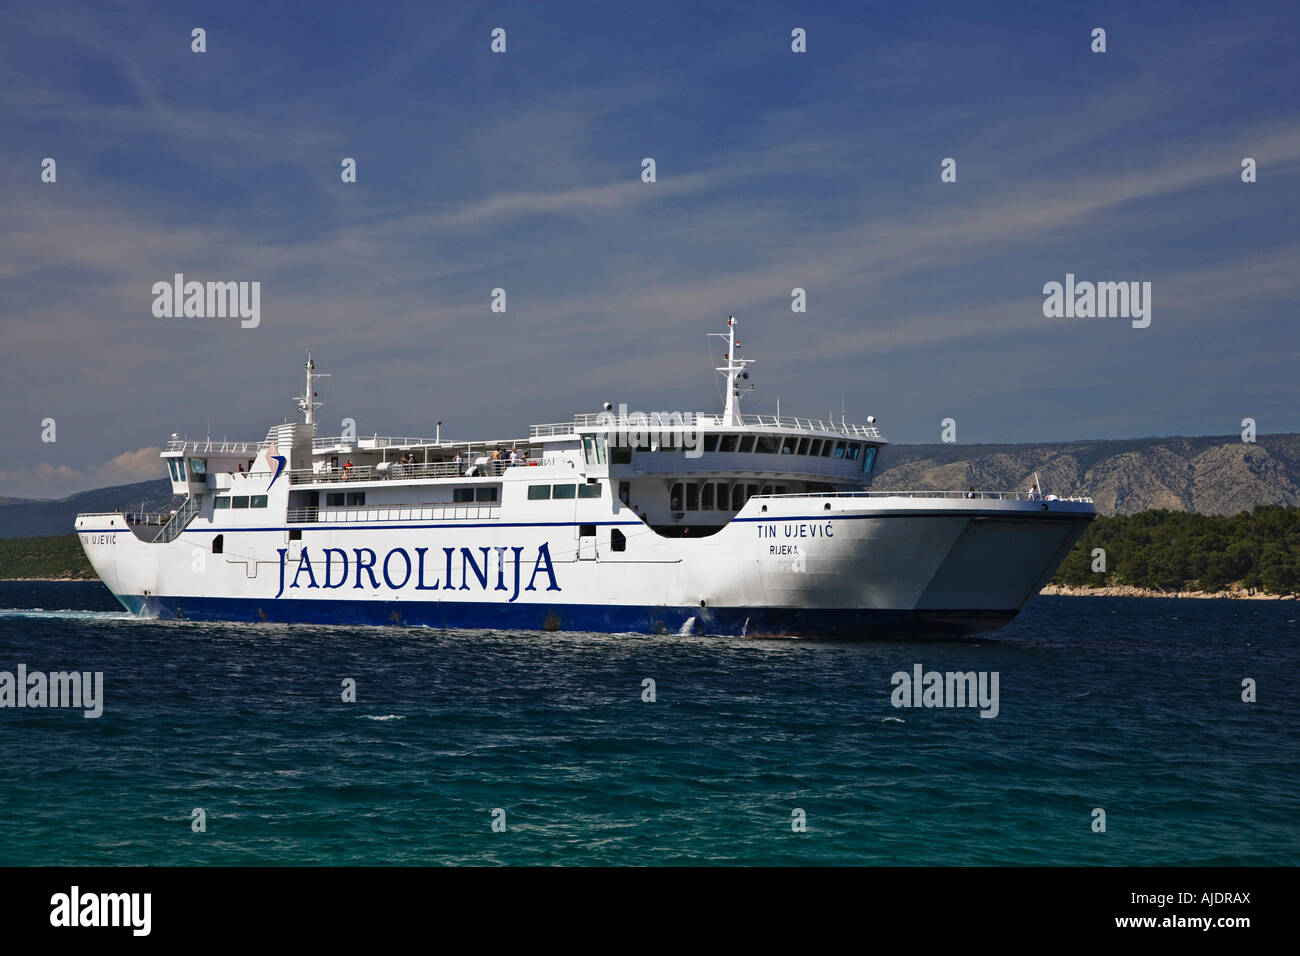 Car ferry on the calm waters of the Adriatic Sea off the coast of Croatia. Stock Photo